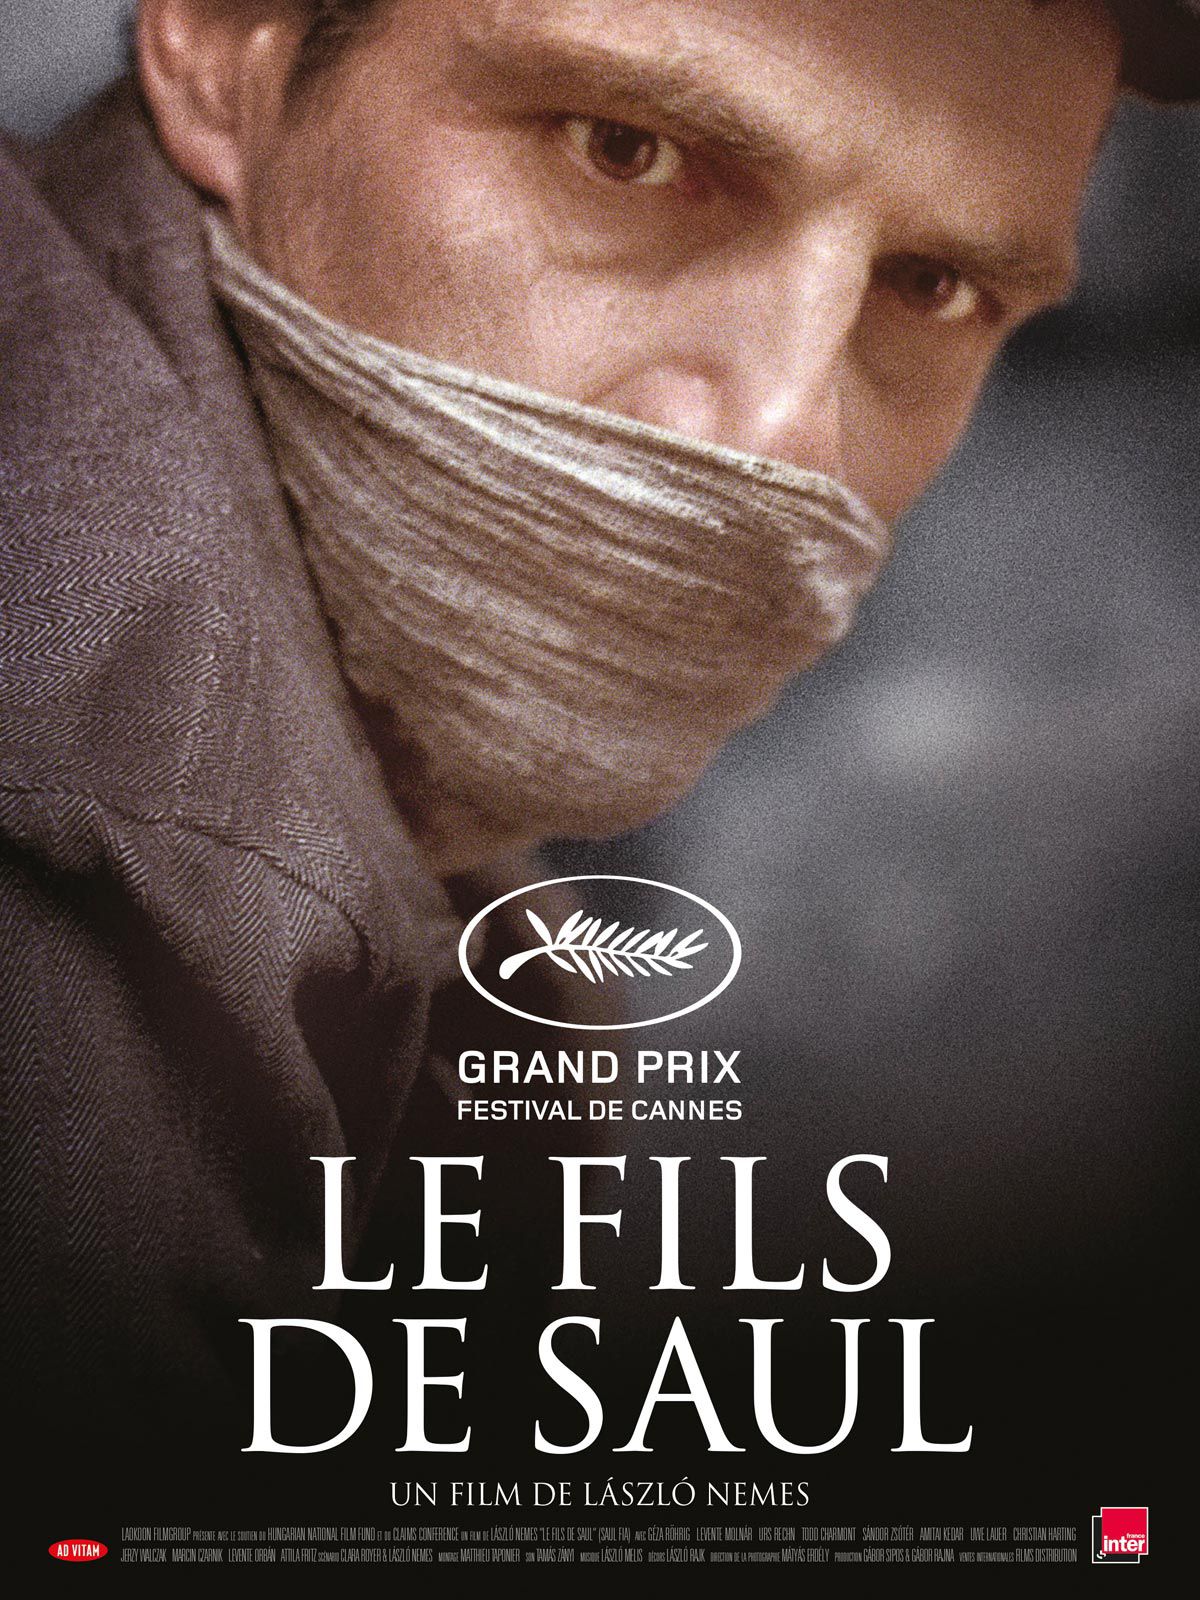 Le Fils de Saul - Film (2015) streaming VF gratuit complet